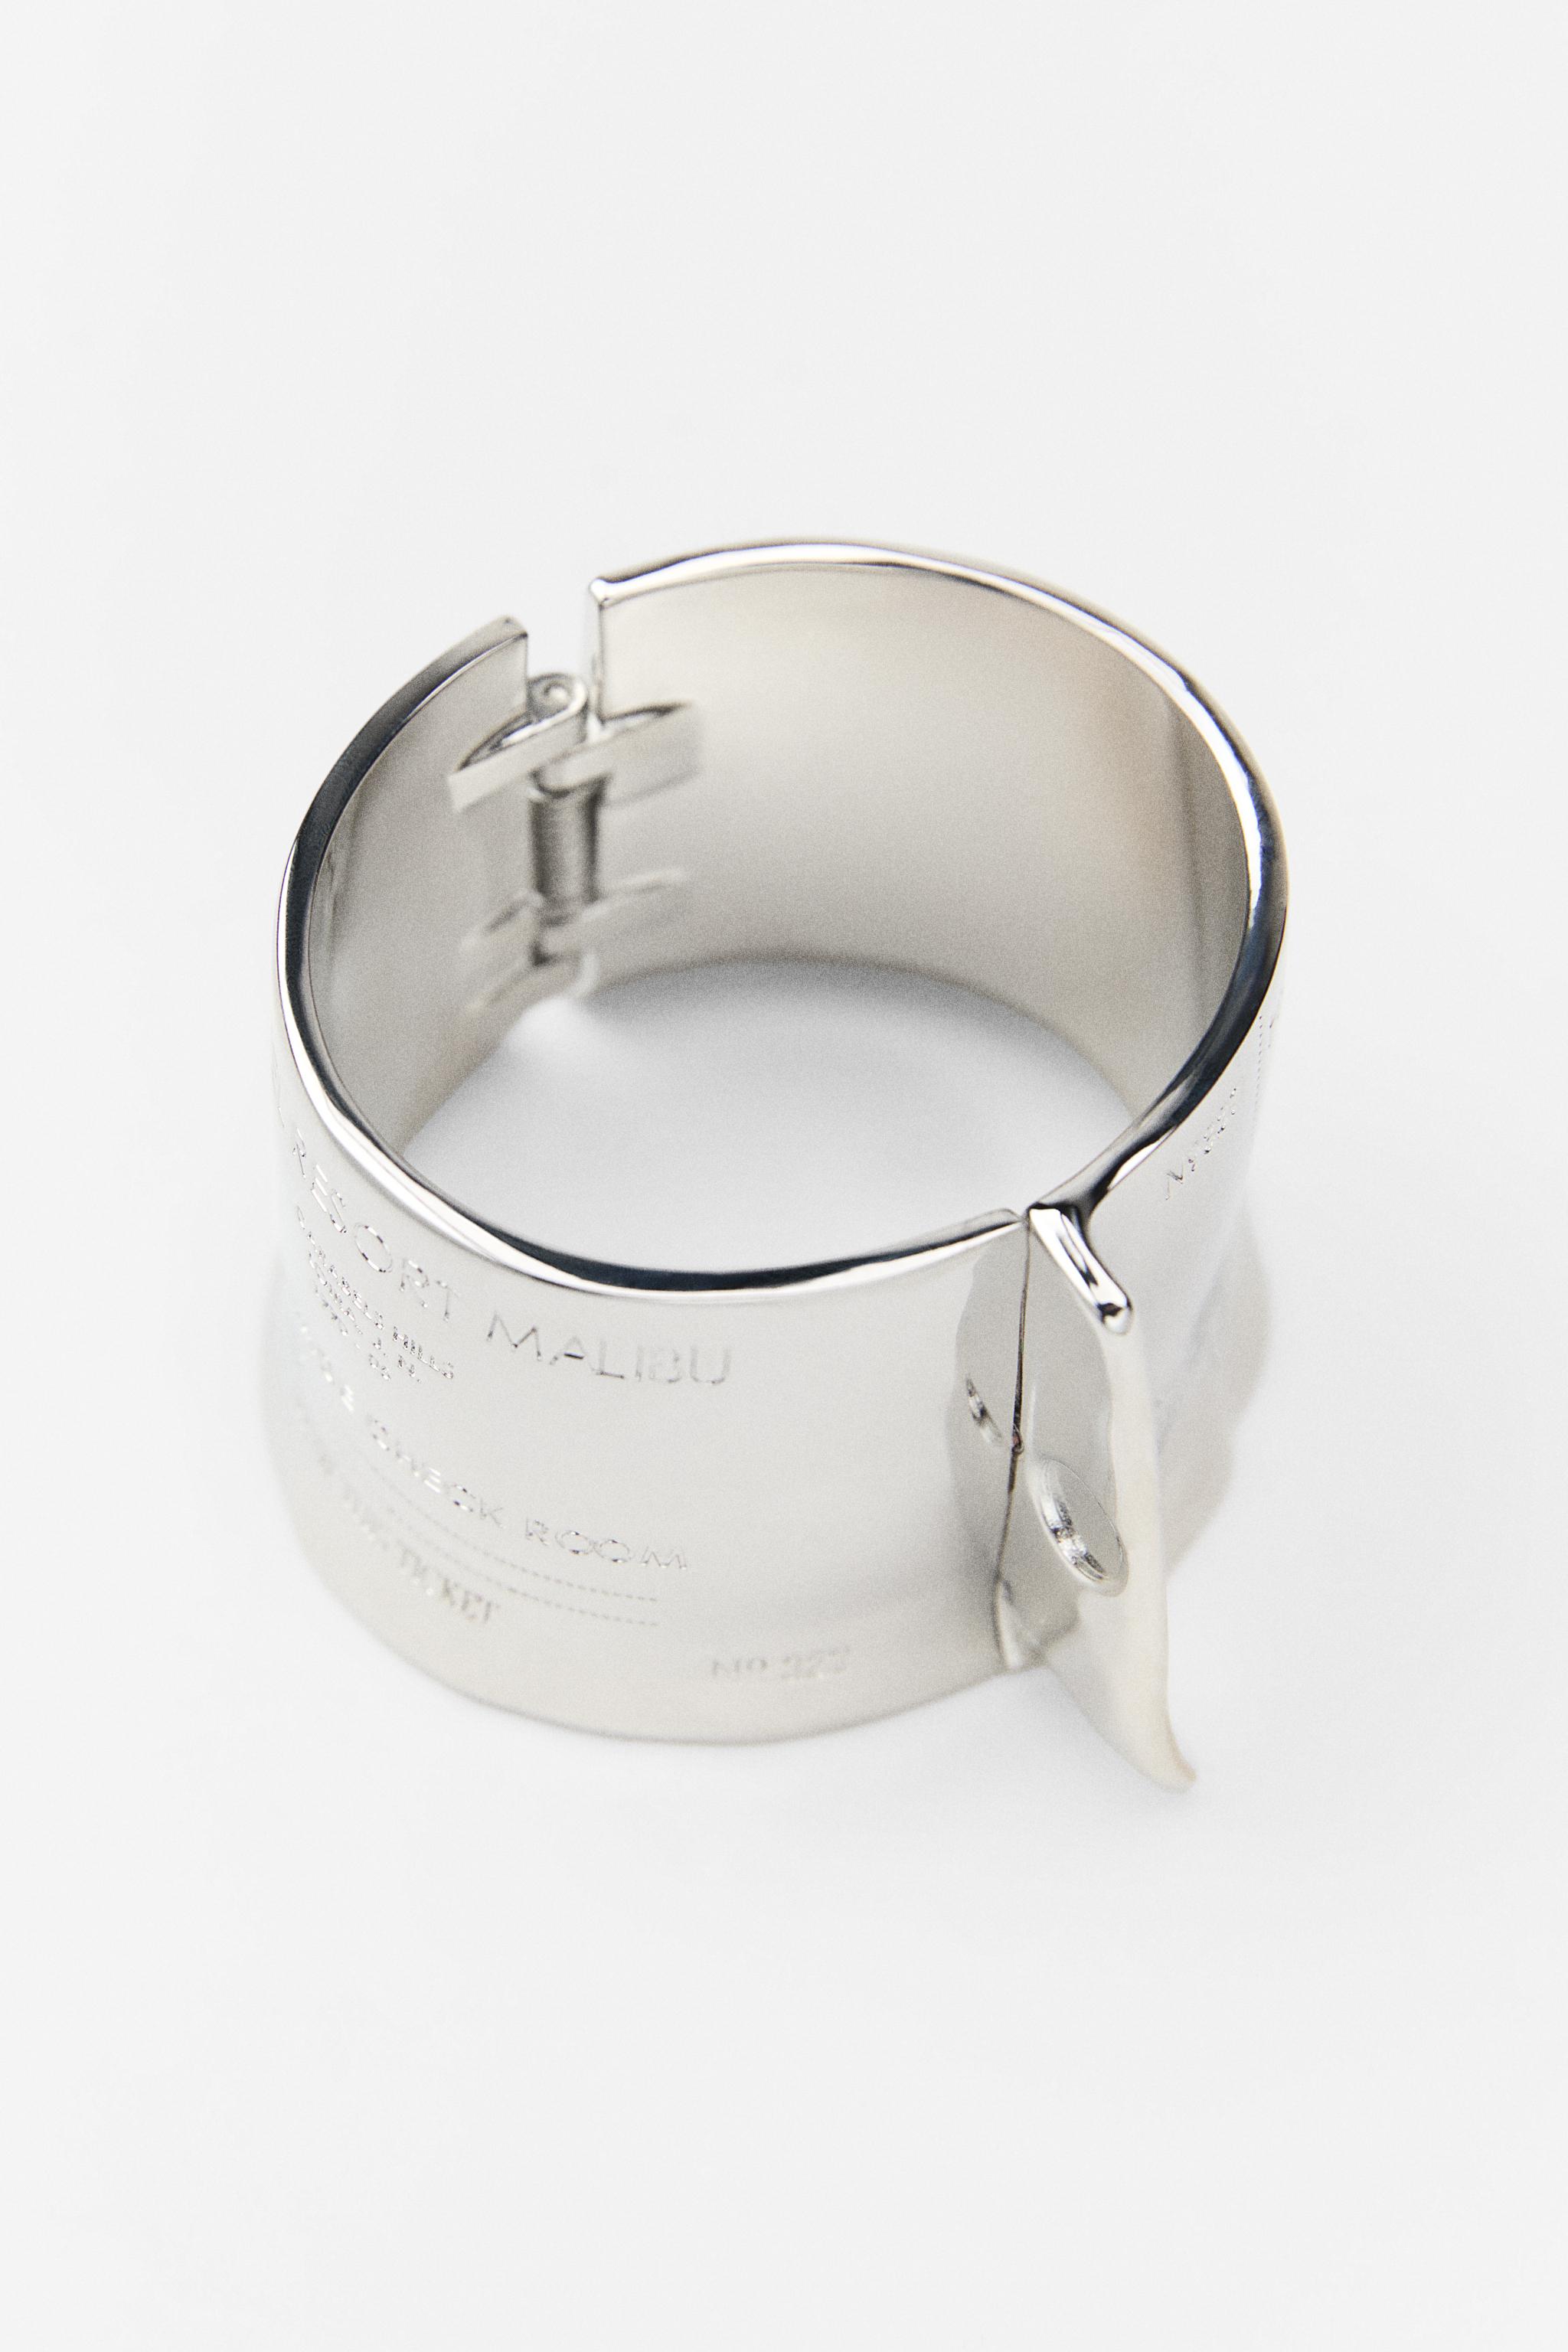  Lucky Brand Multi-Row Cuff Bracelet, Silver: Clothing